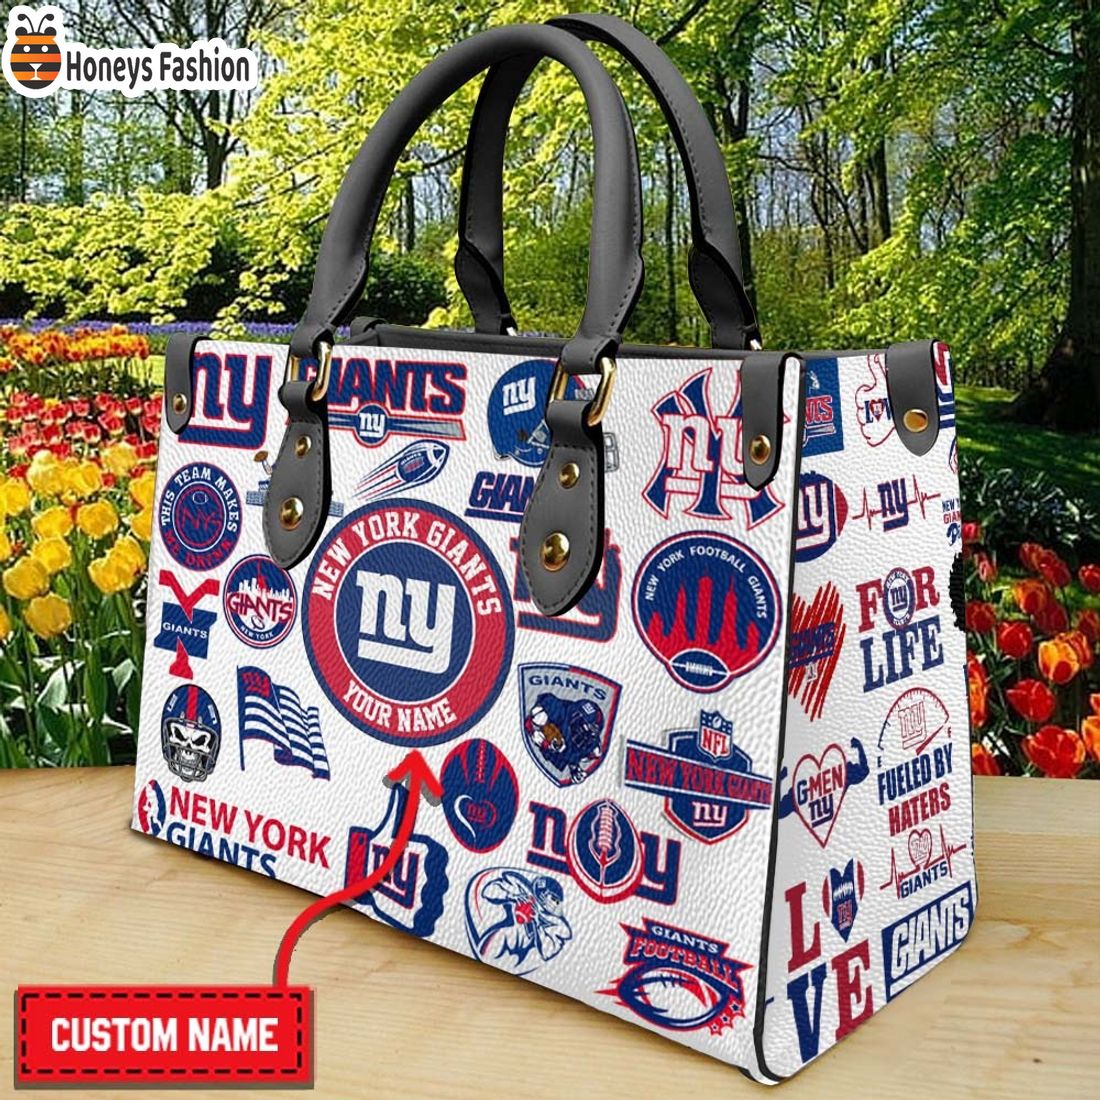 New York Giants Personalized Leather Handbag